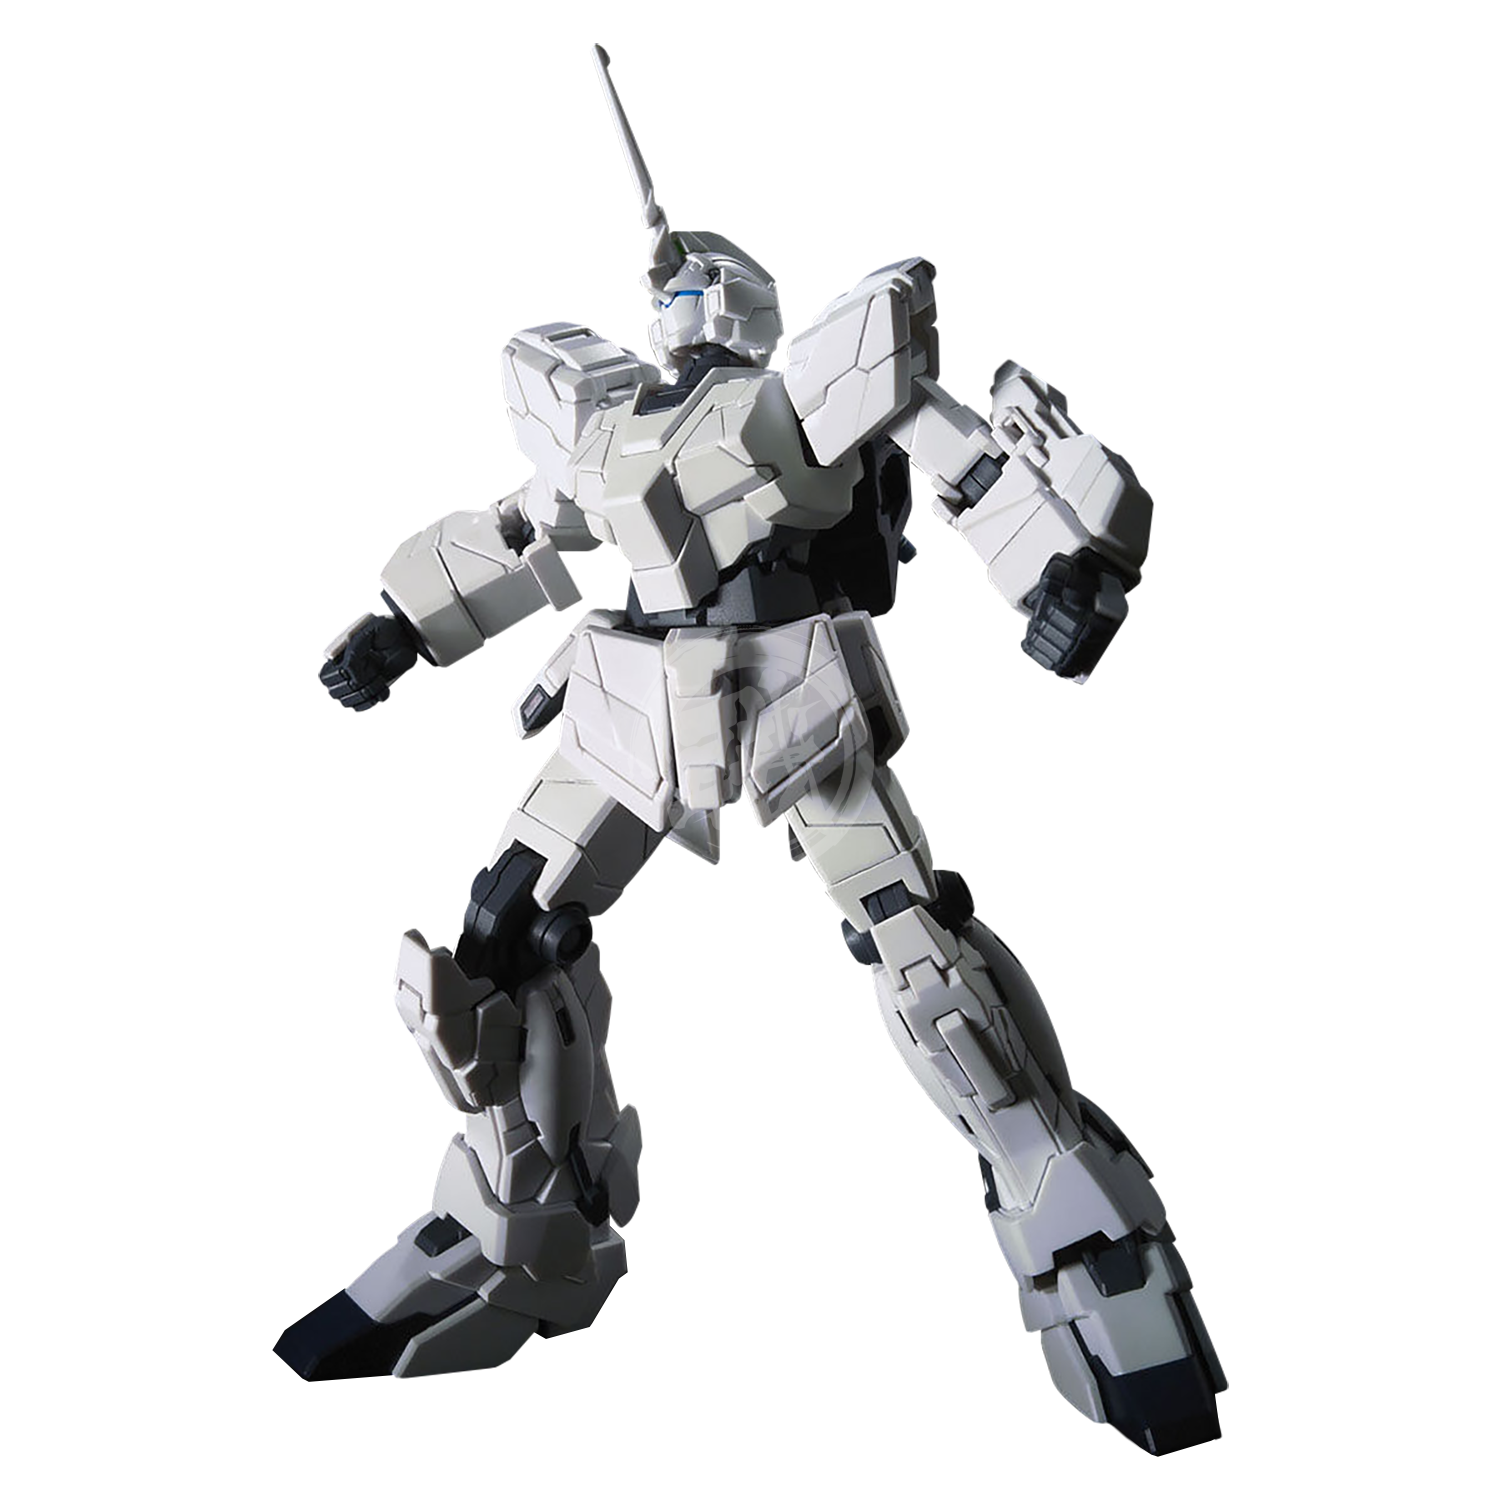 HG Unicorn Gundam [Unicorn Mode] - ShokuninGunpla